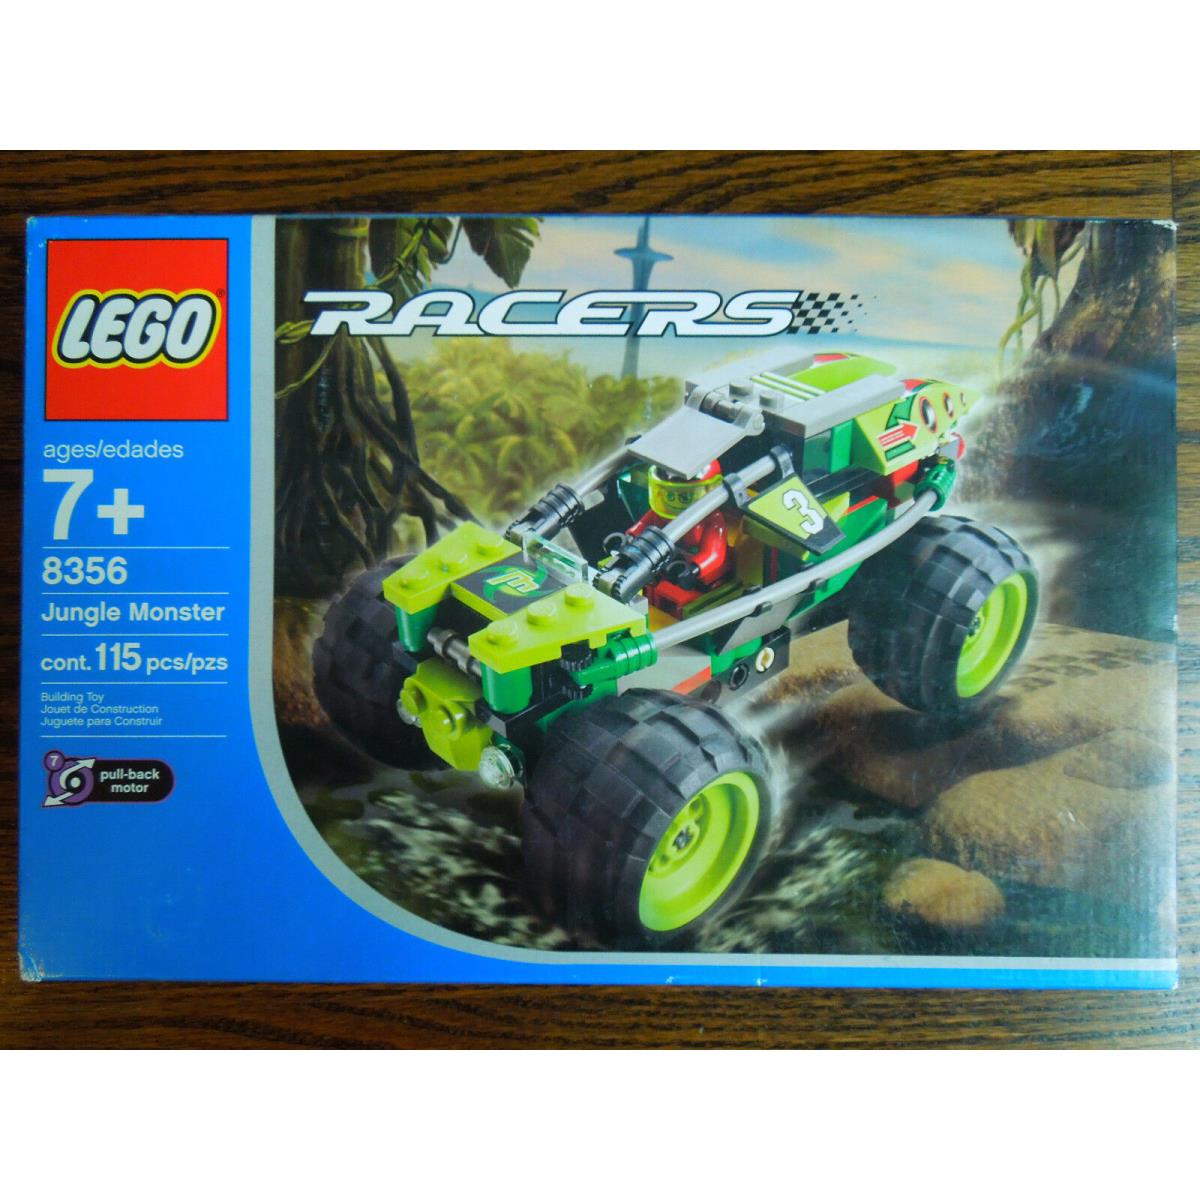 Lego 8356 Jungel Monster Ages 7+ 115 Pcs